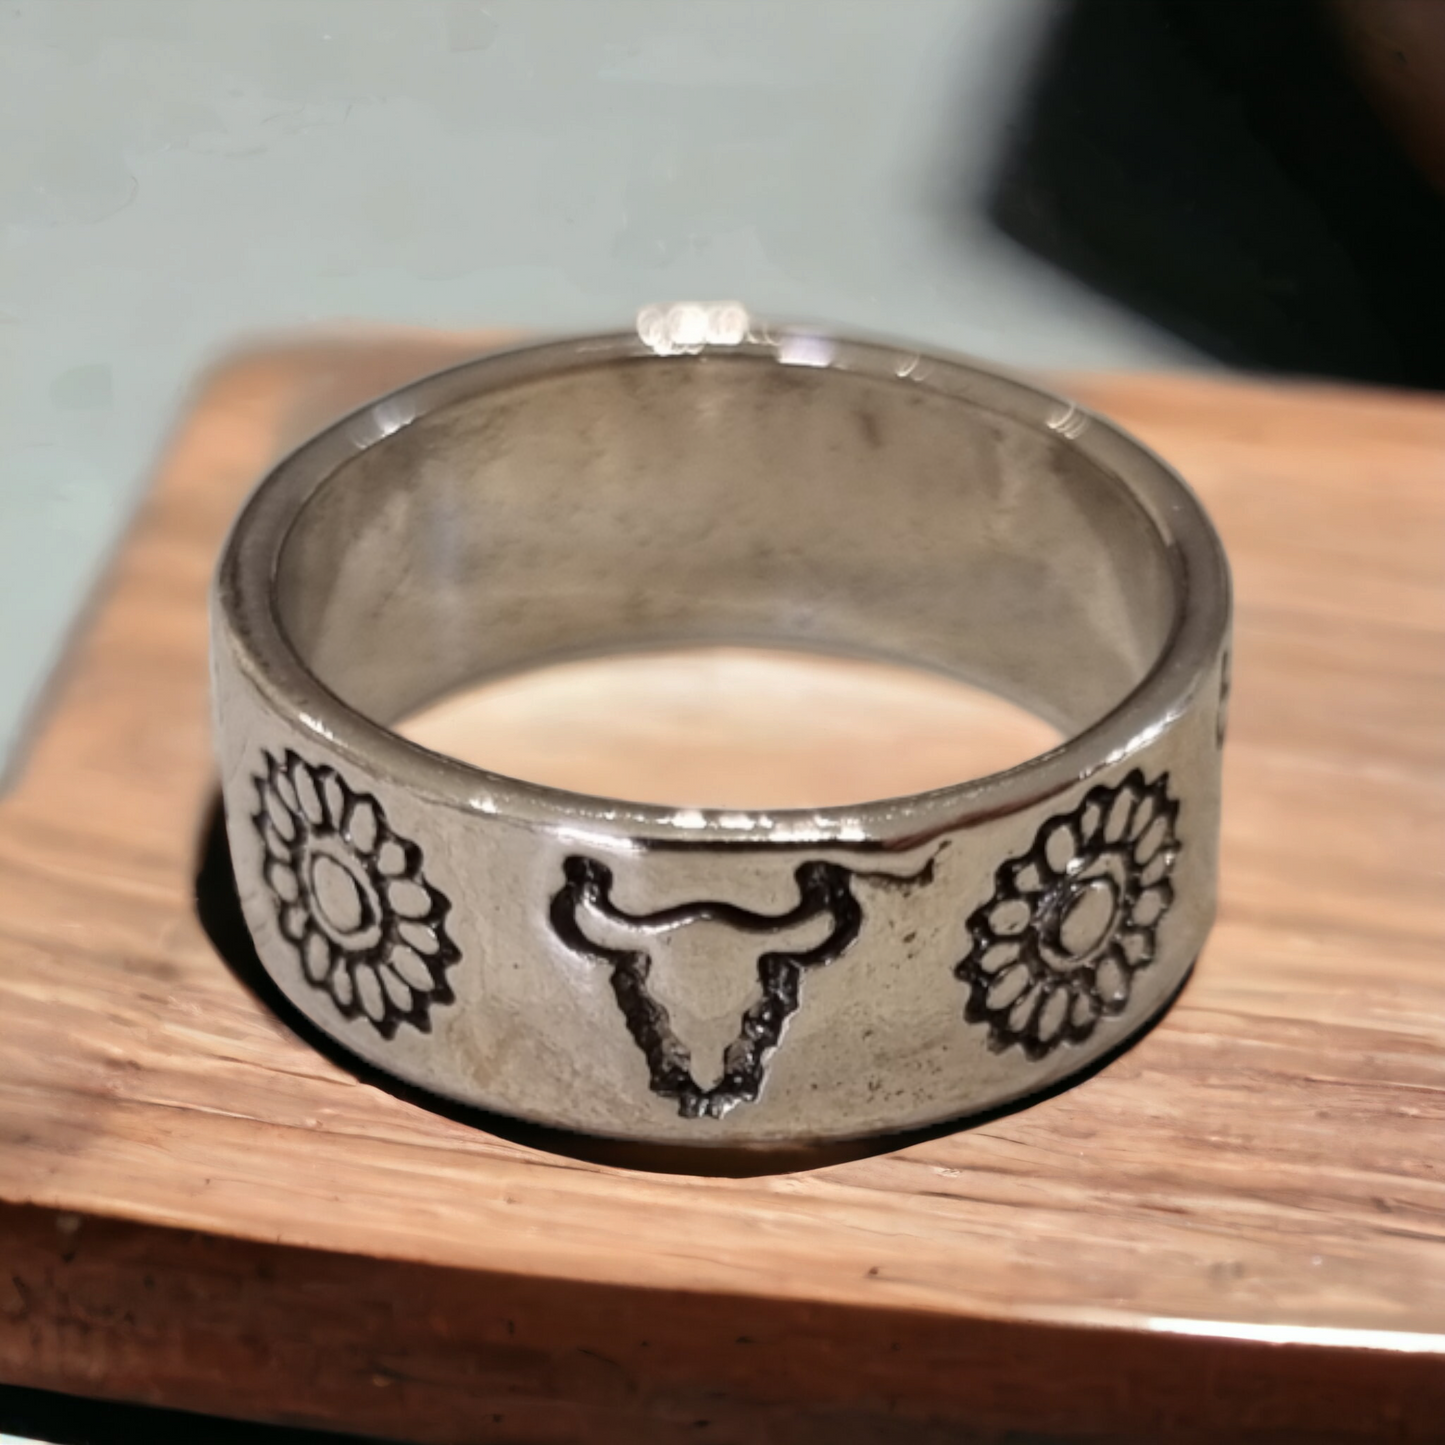 Bull Ring